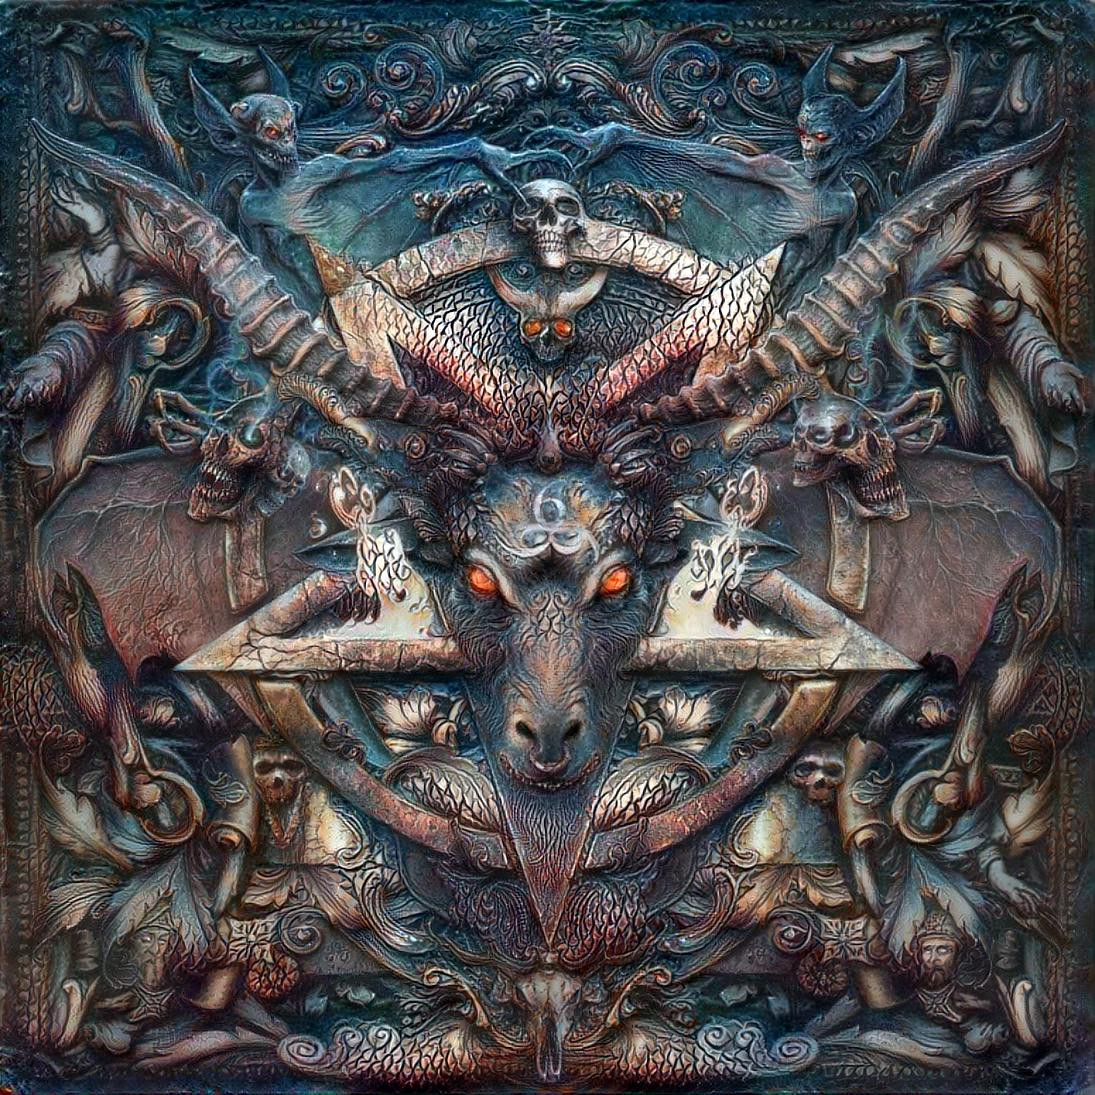 Soundtrack for Doom WAD "SIGIL" by Buckethead